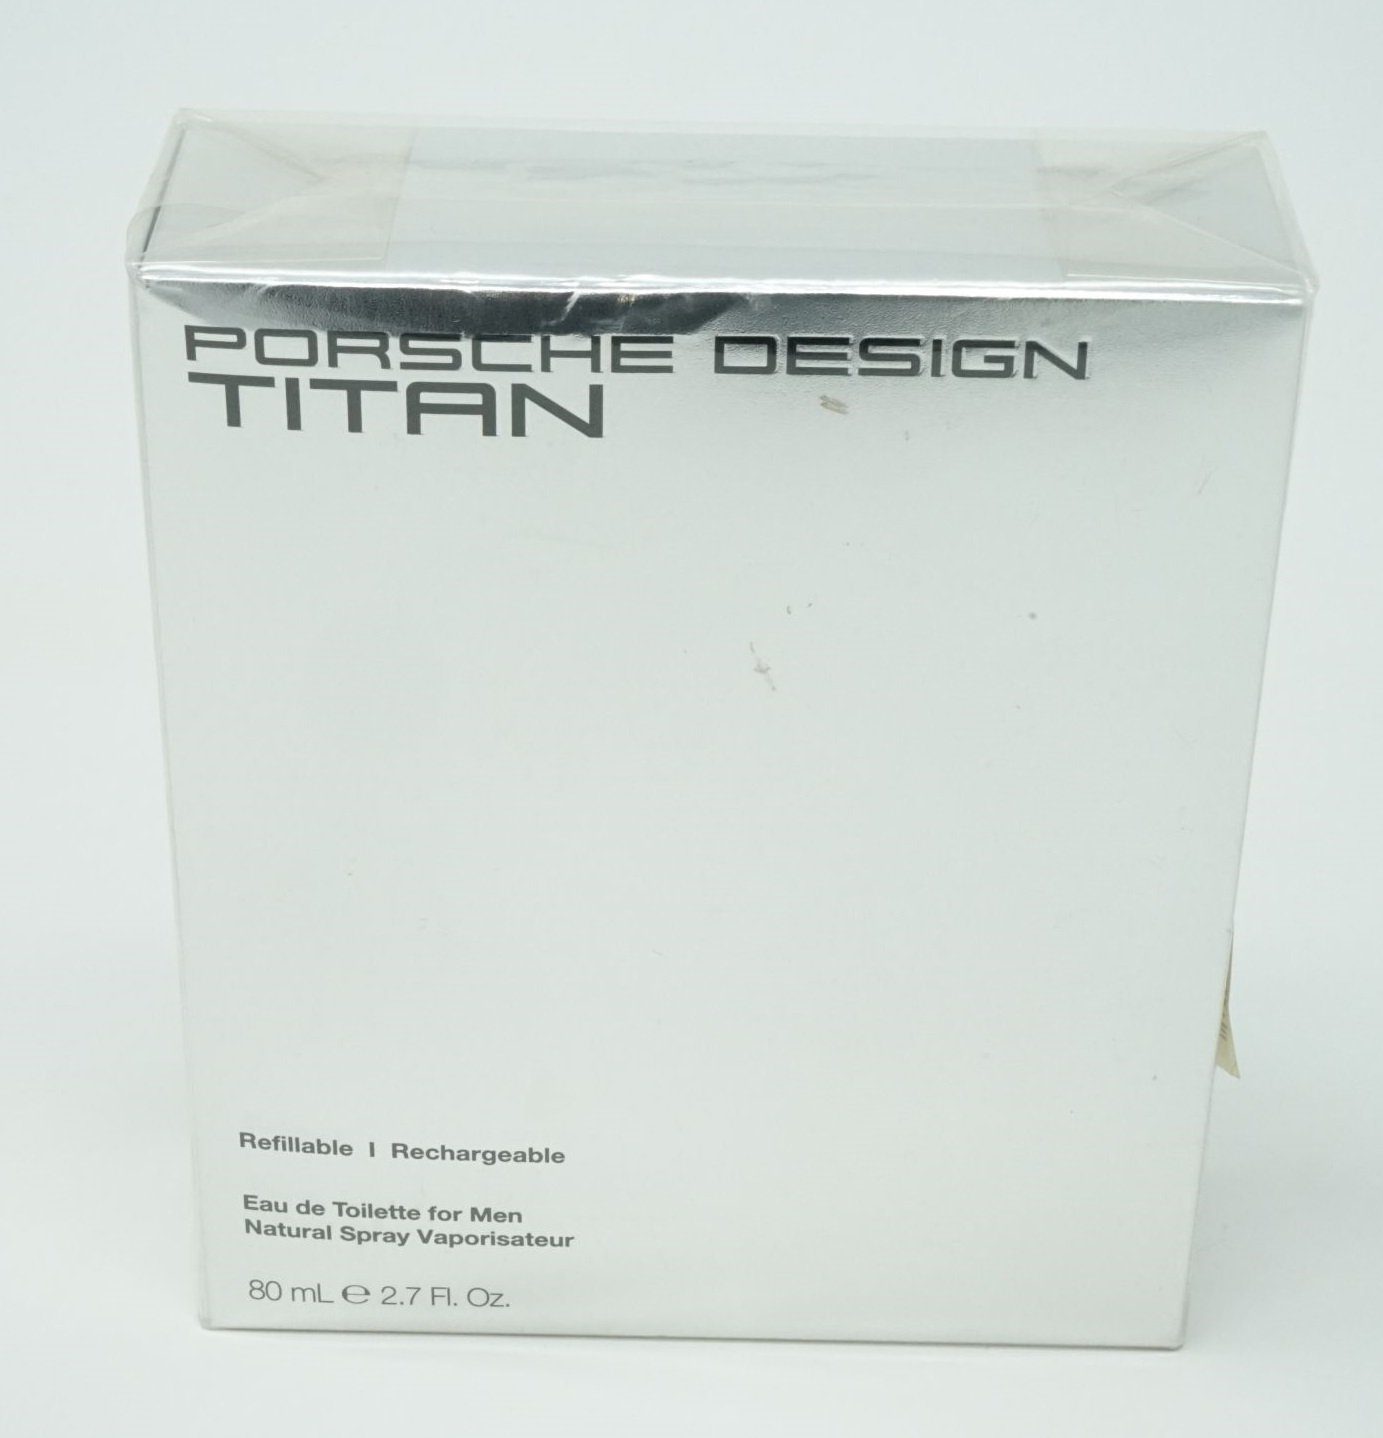 Porsche Eau de Toilette Porsche Design Titan Eau de Toilette For Men Spray 80 ml